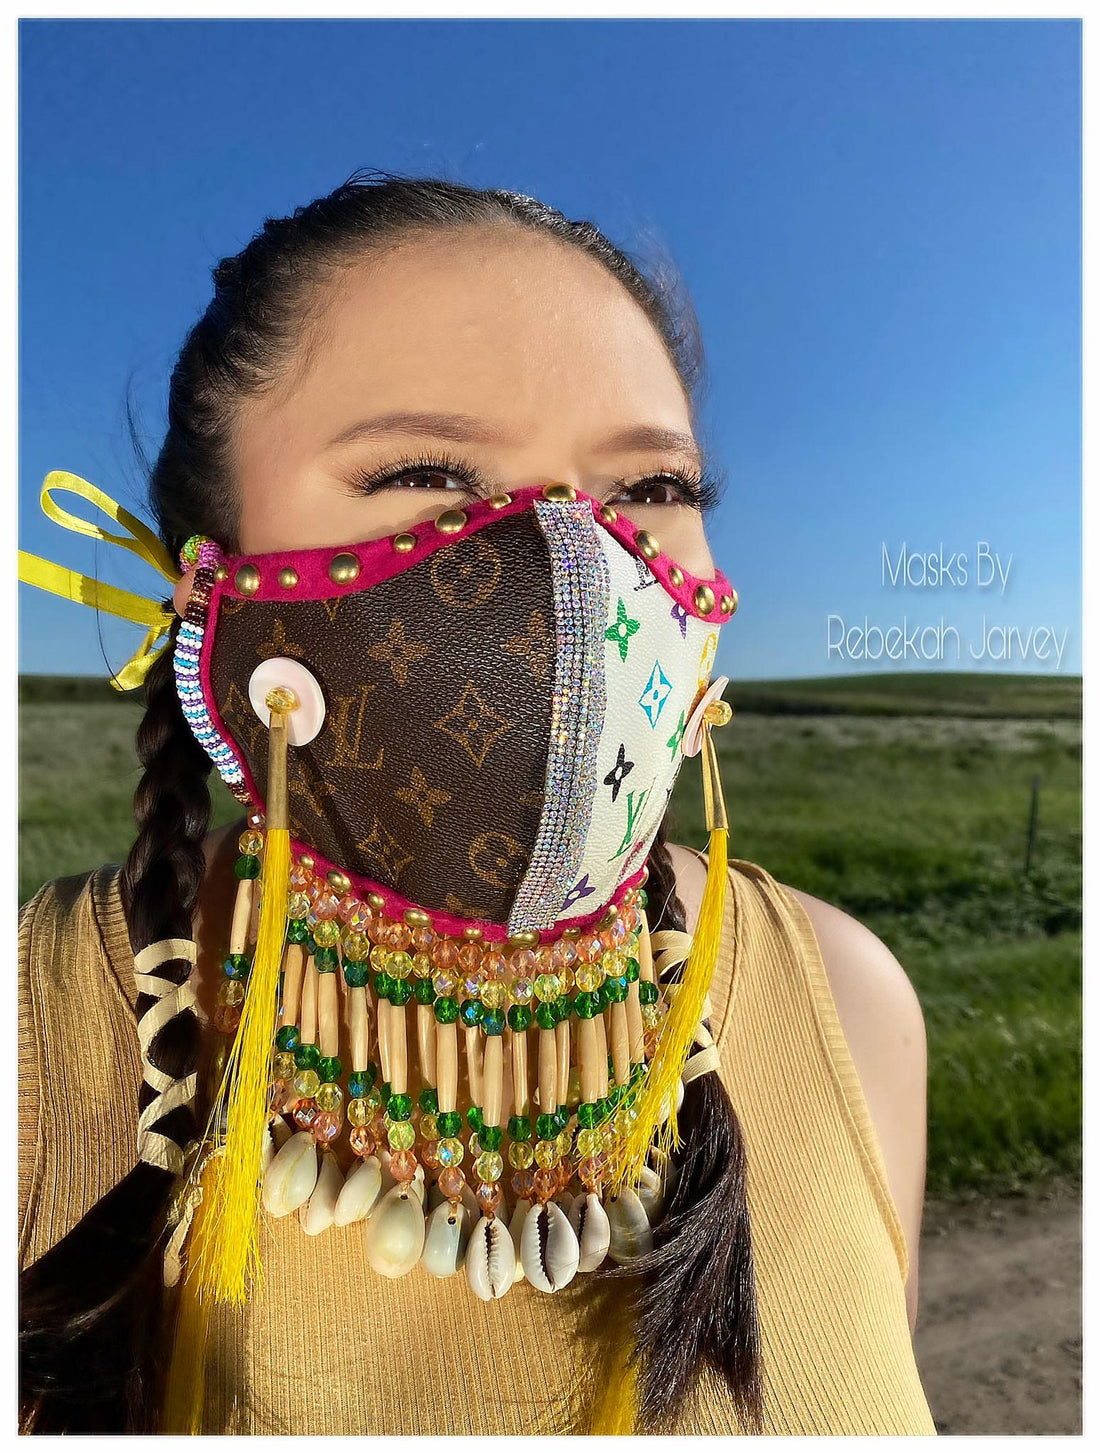 News Article "Chippewa Cree fashion designer’s face mask art draws fans worldwide"